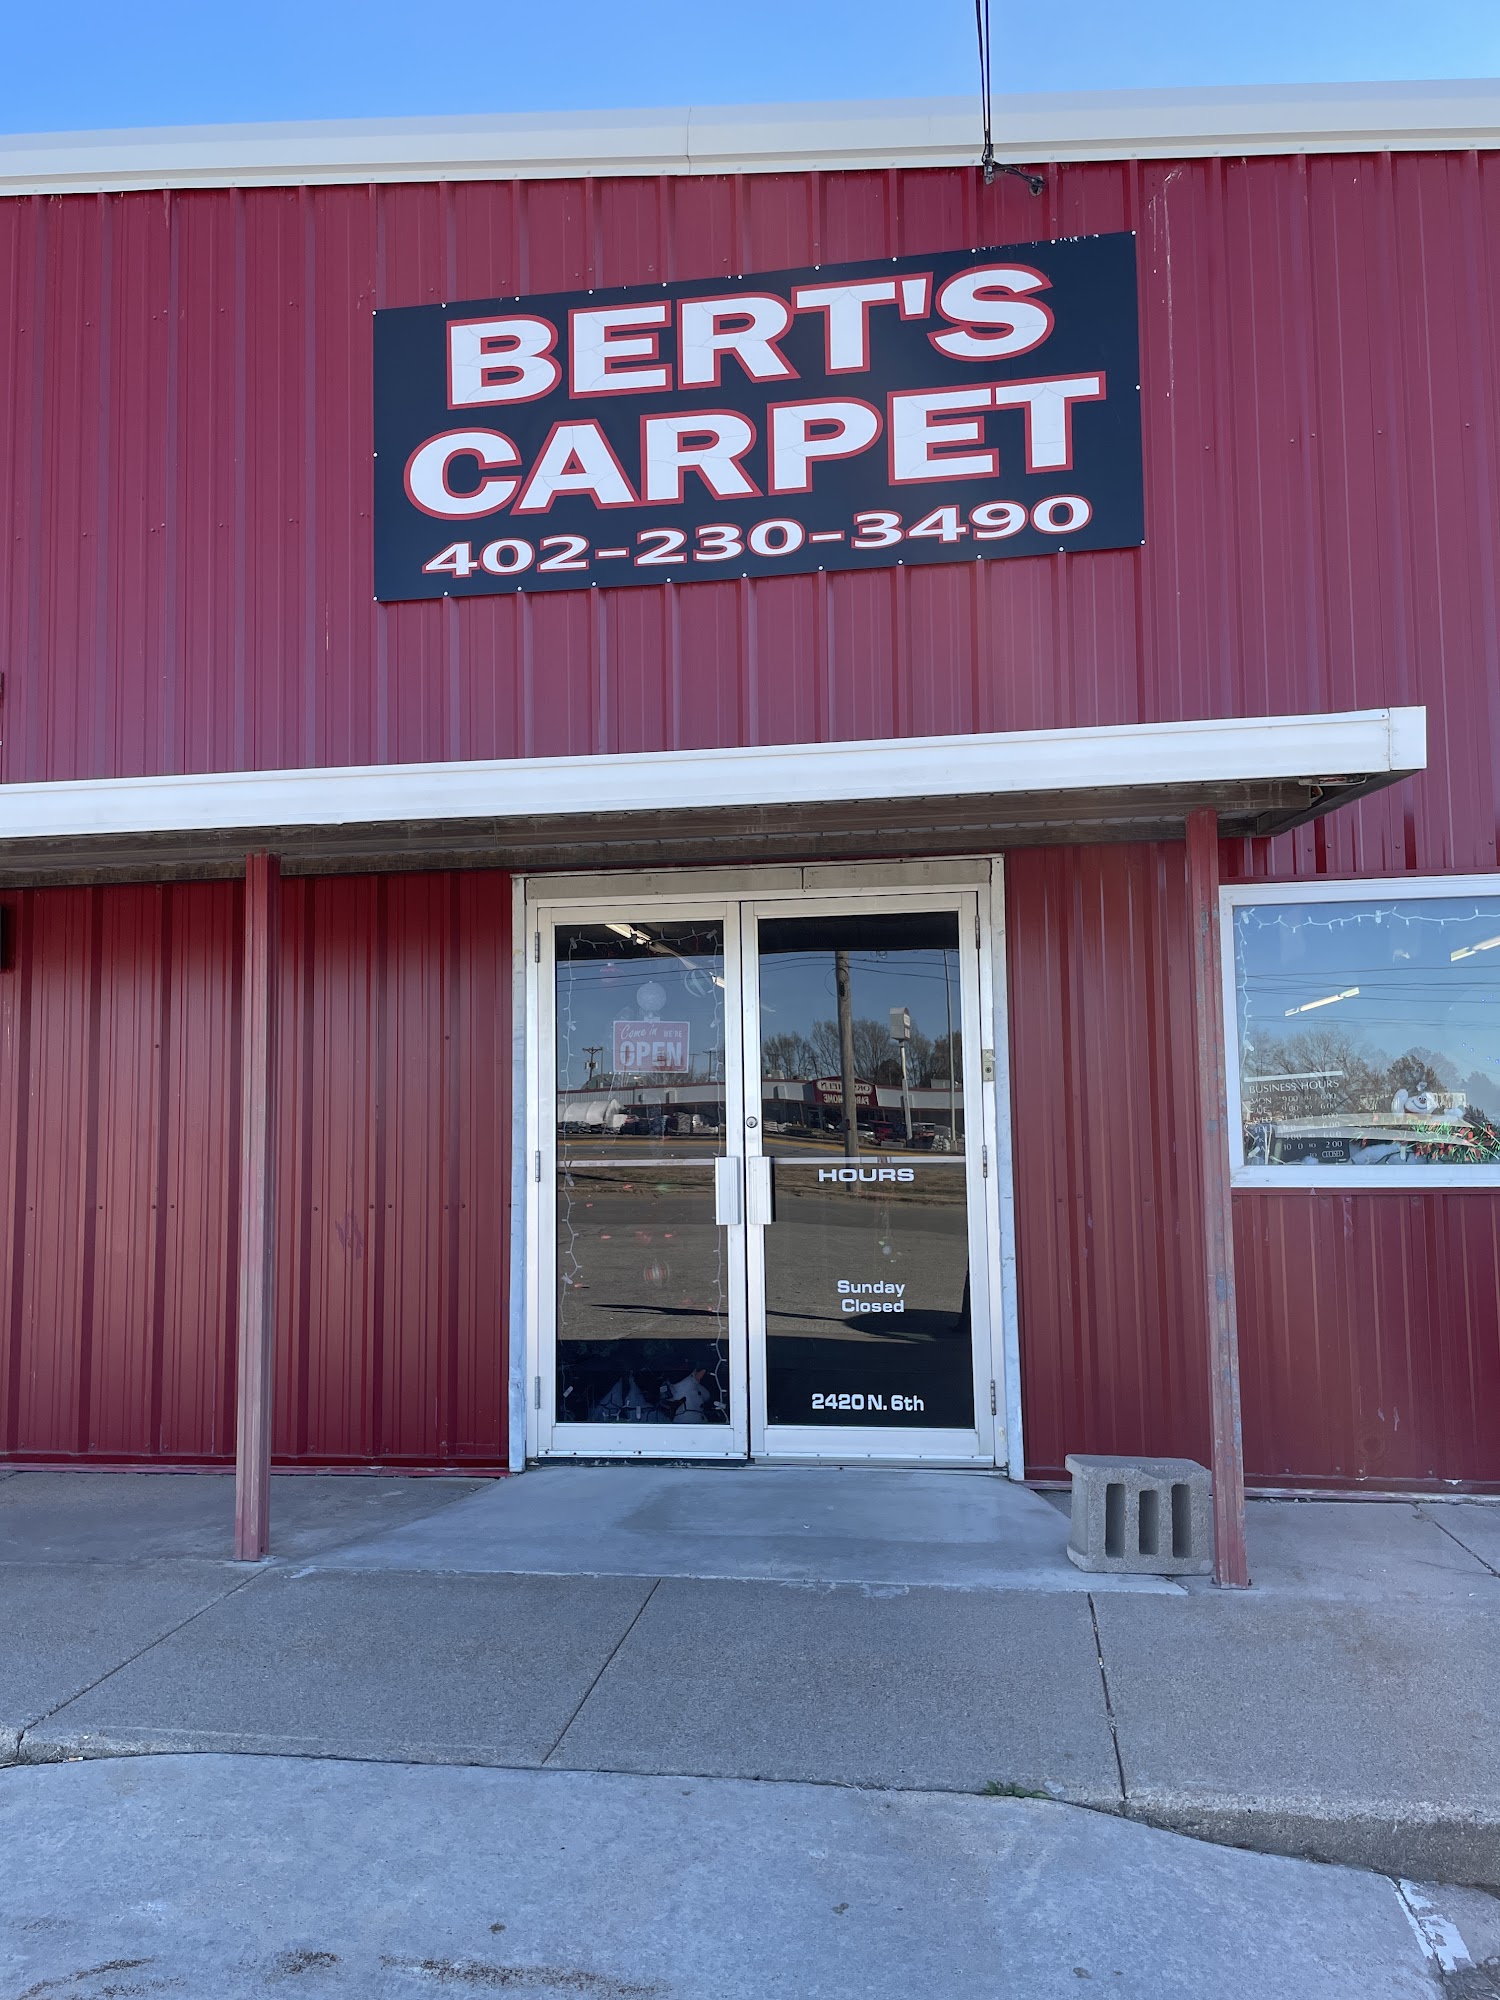 Berts Carpet 2420 N 6th St, Beatrice Nebraska 68310